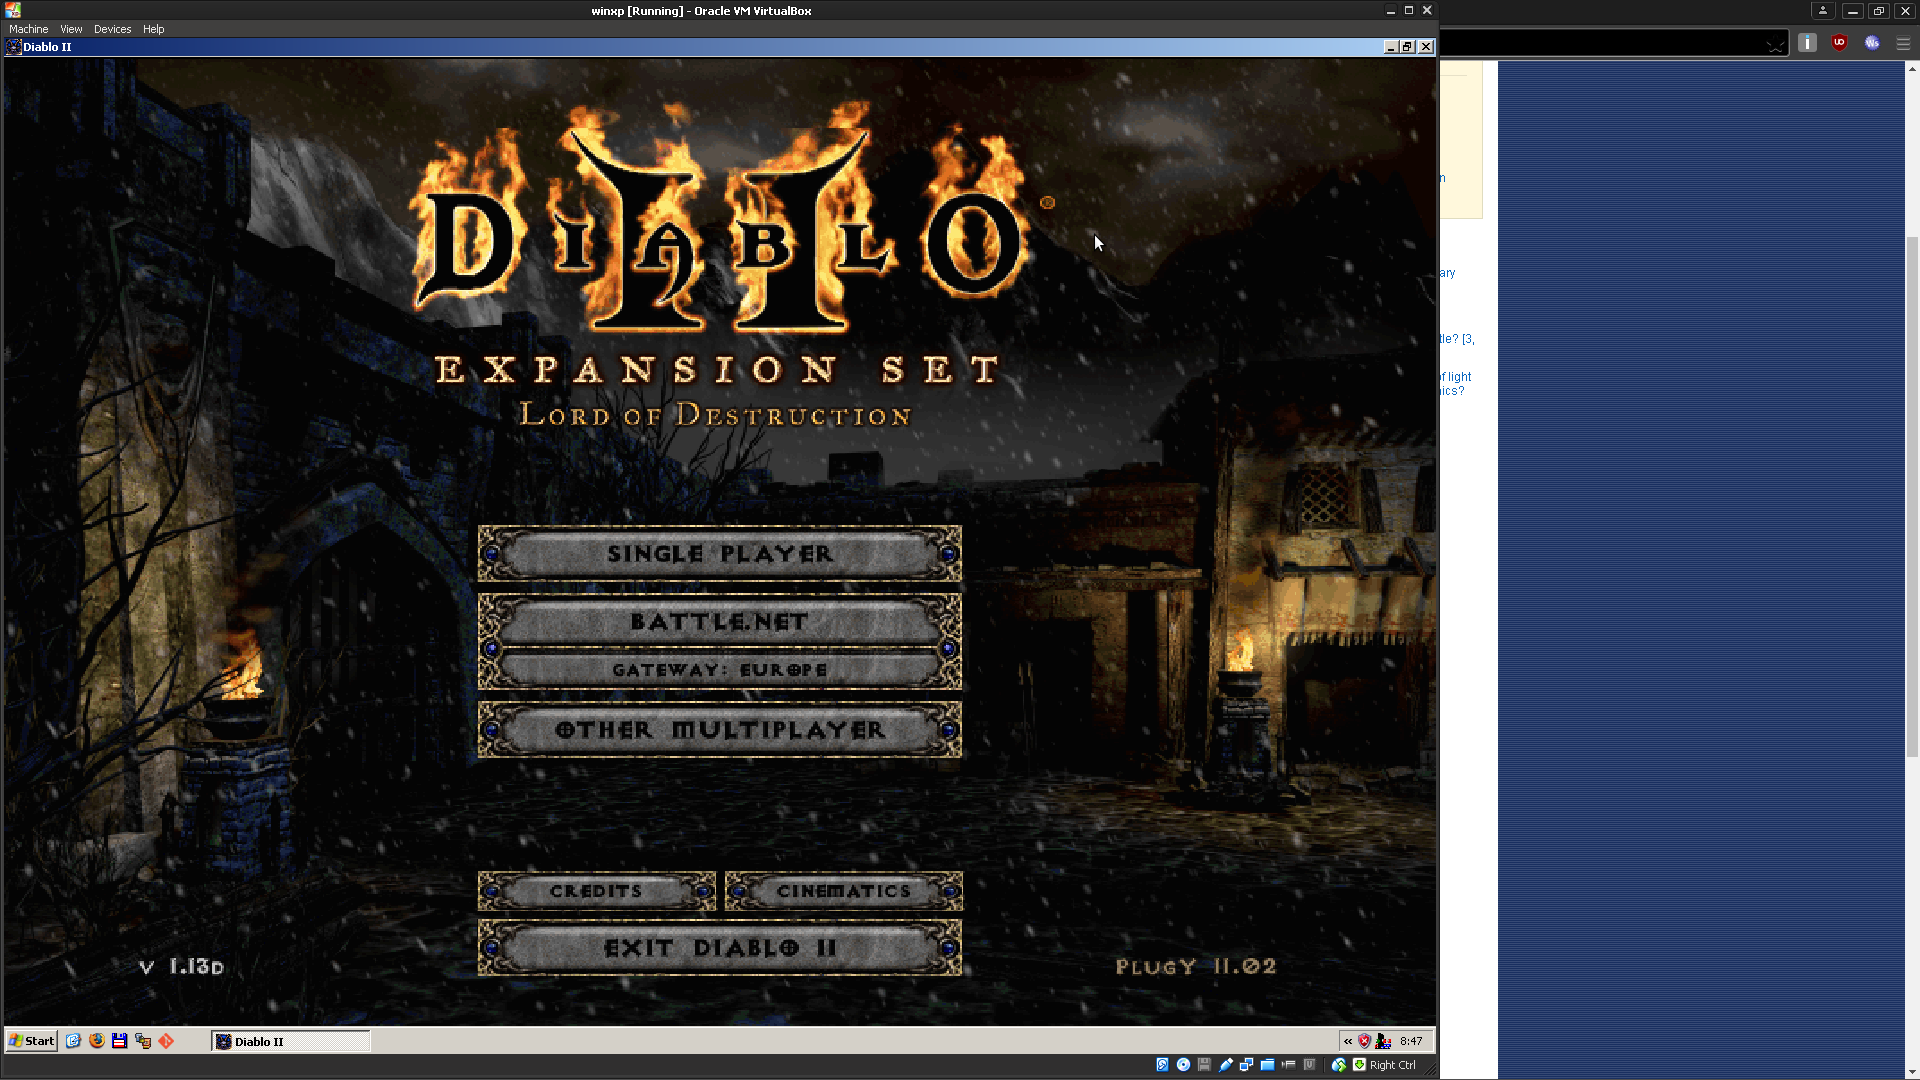 Diablo 2 Wont Download On Mac